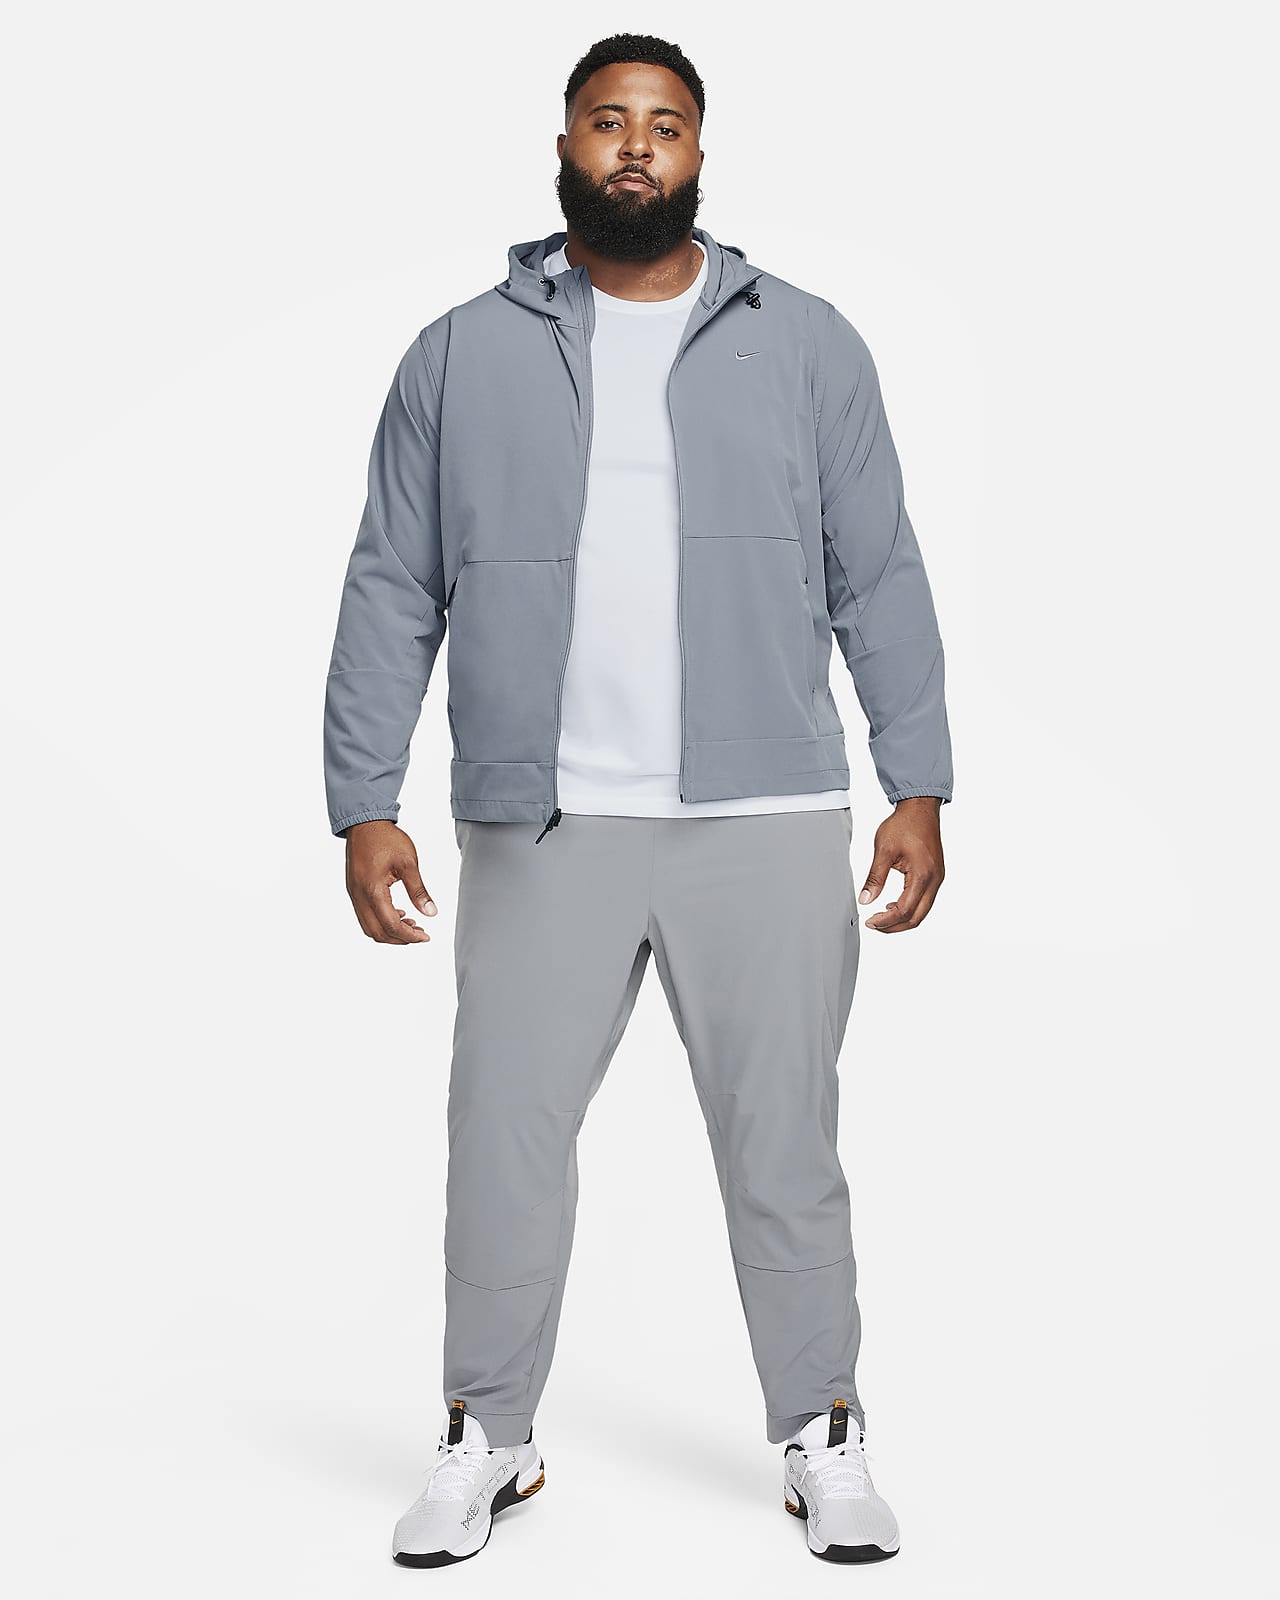 Nike Unlimited Men's Water-Repellent Hooded Versatile Jacket.